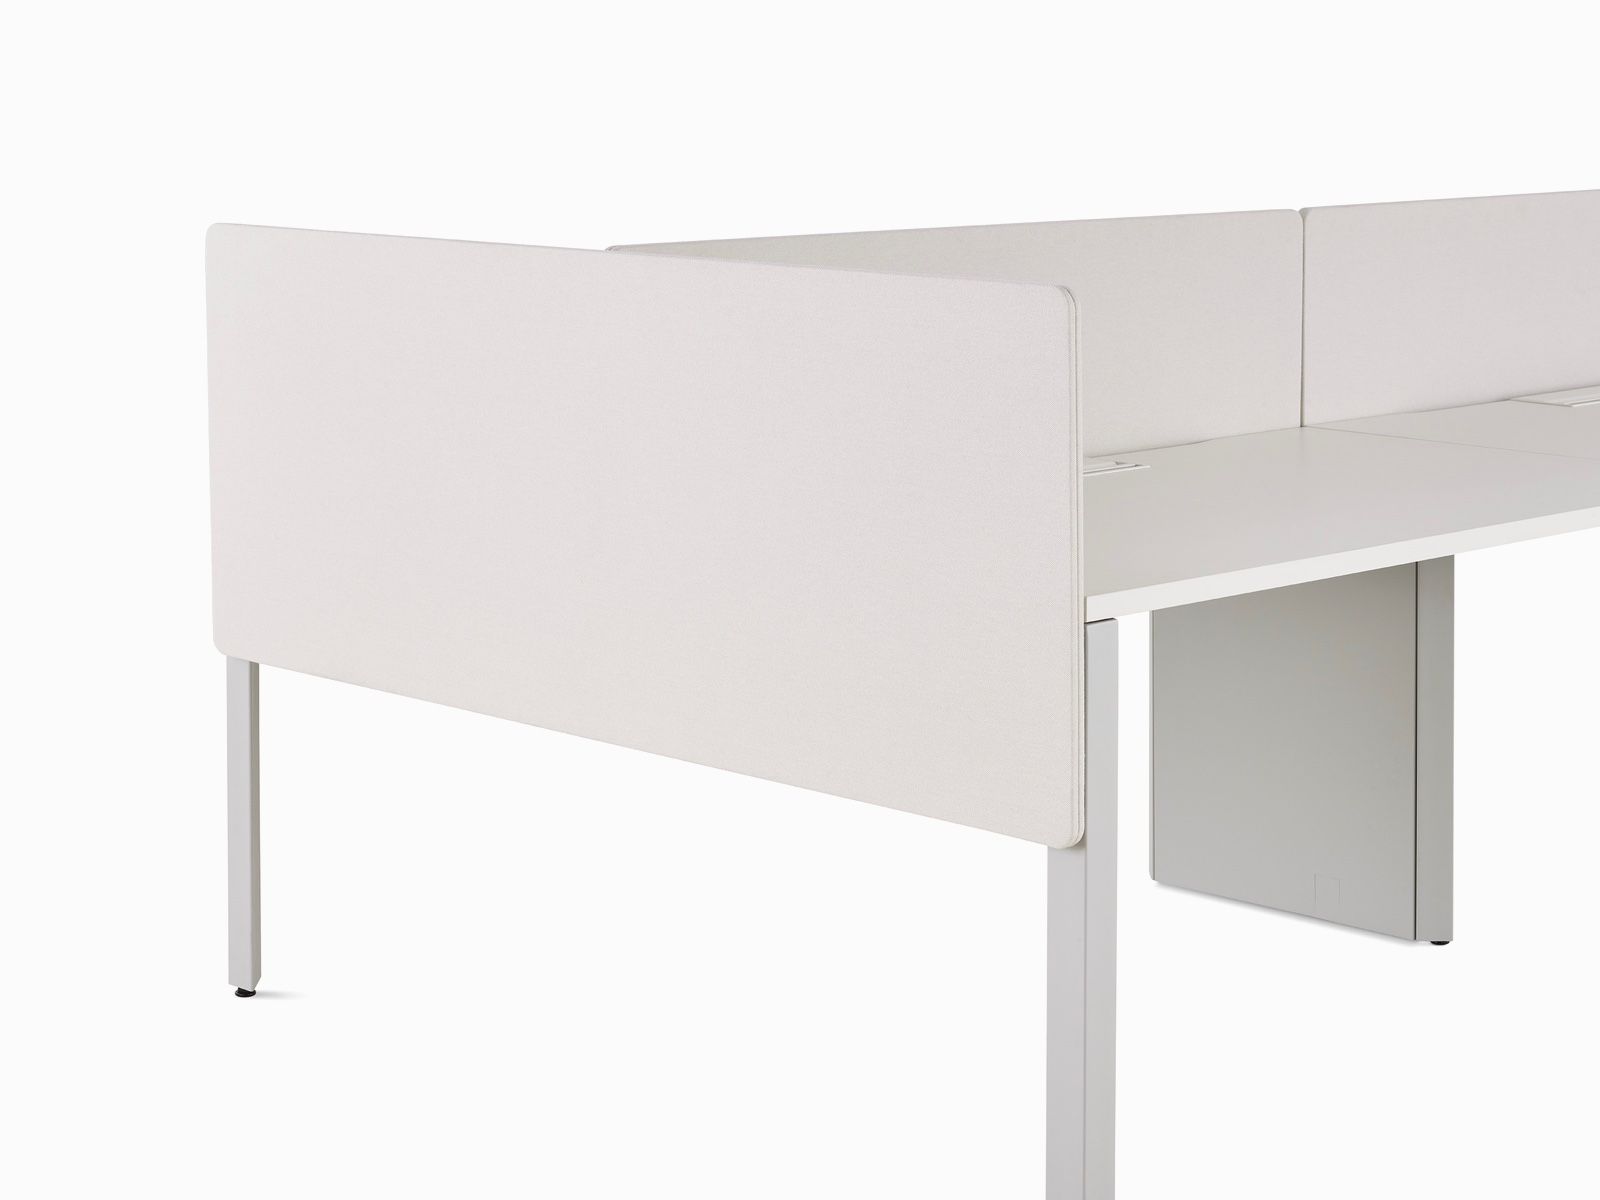 Herman Miller White Bench Desks 1600 X 800 White Top White Legs Glass Screens 